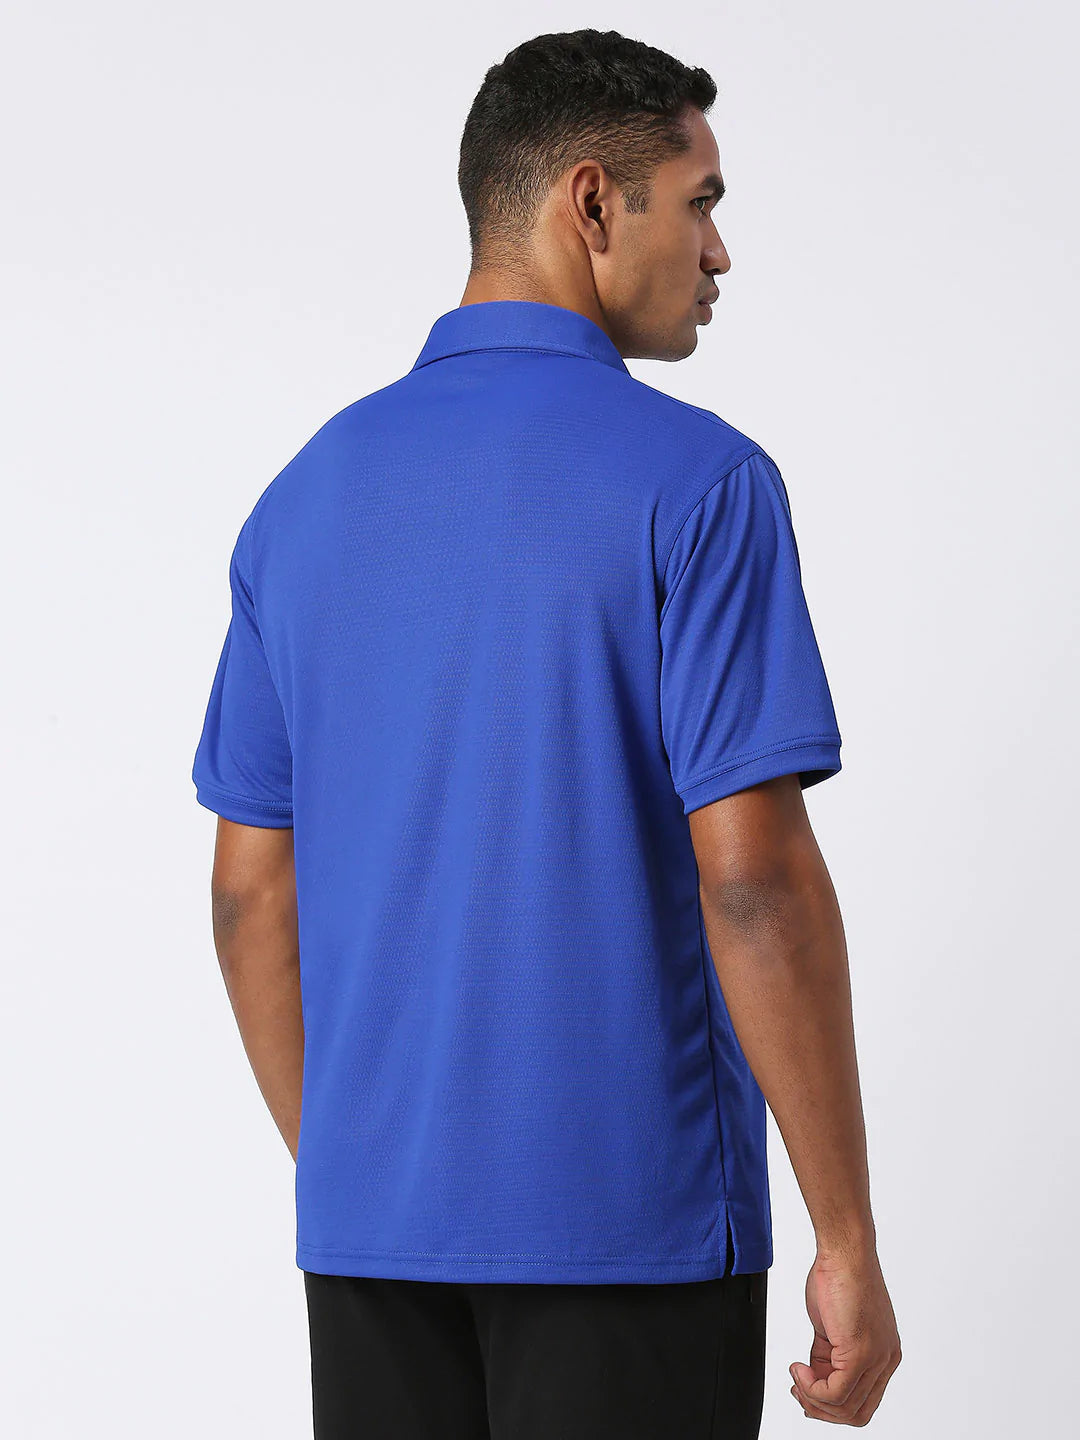 Men's Sports Polo Shirt - Royal Blue - Front